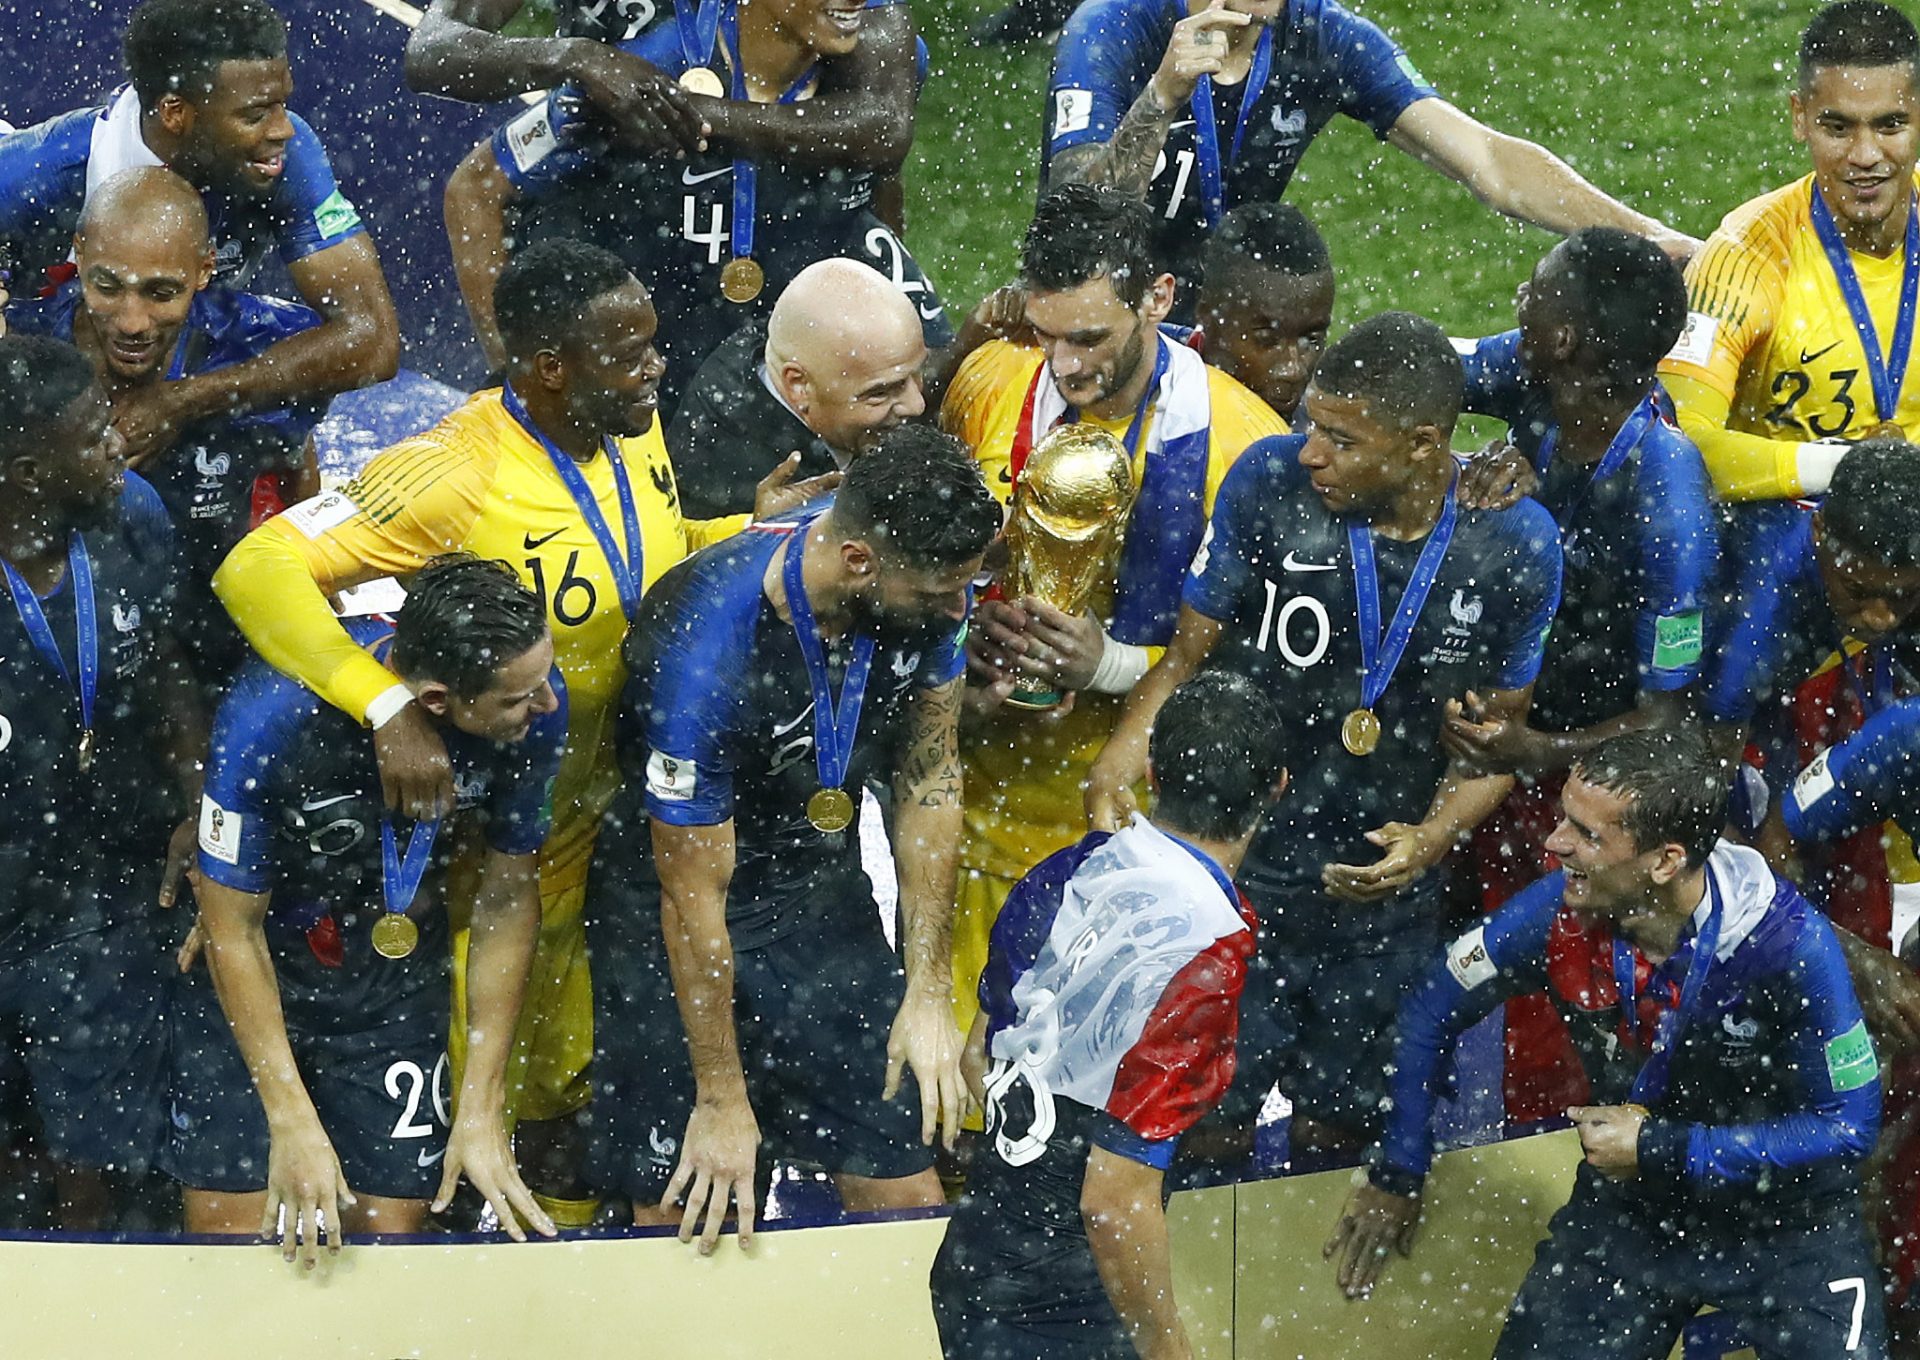 FIFA president Giovanni Infantino
congratulates France captain Hugo
Lloris after his team’s 2018 World Cup
victory against Croatia. Credit: Matteo Ciambelli/NurPhoto via
Getty Images